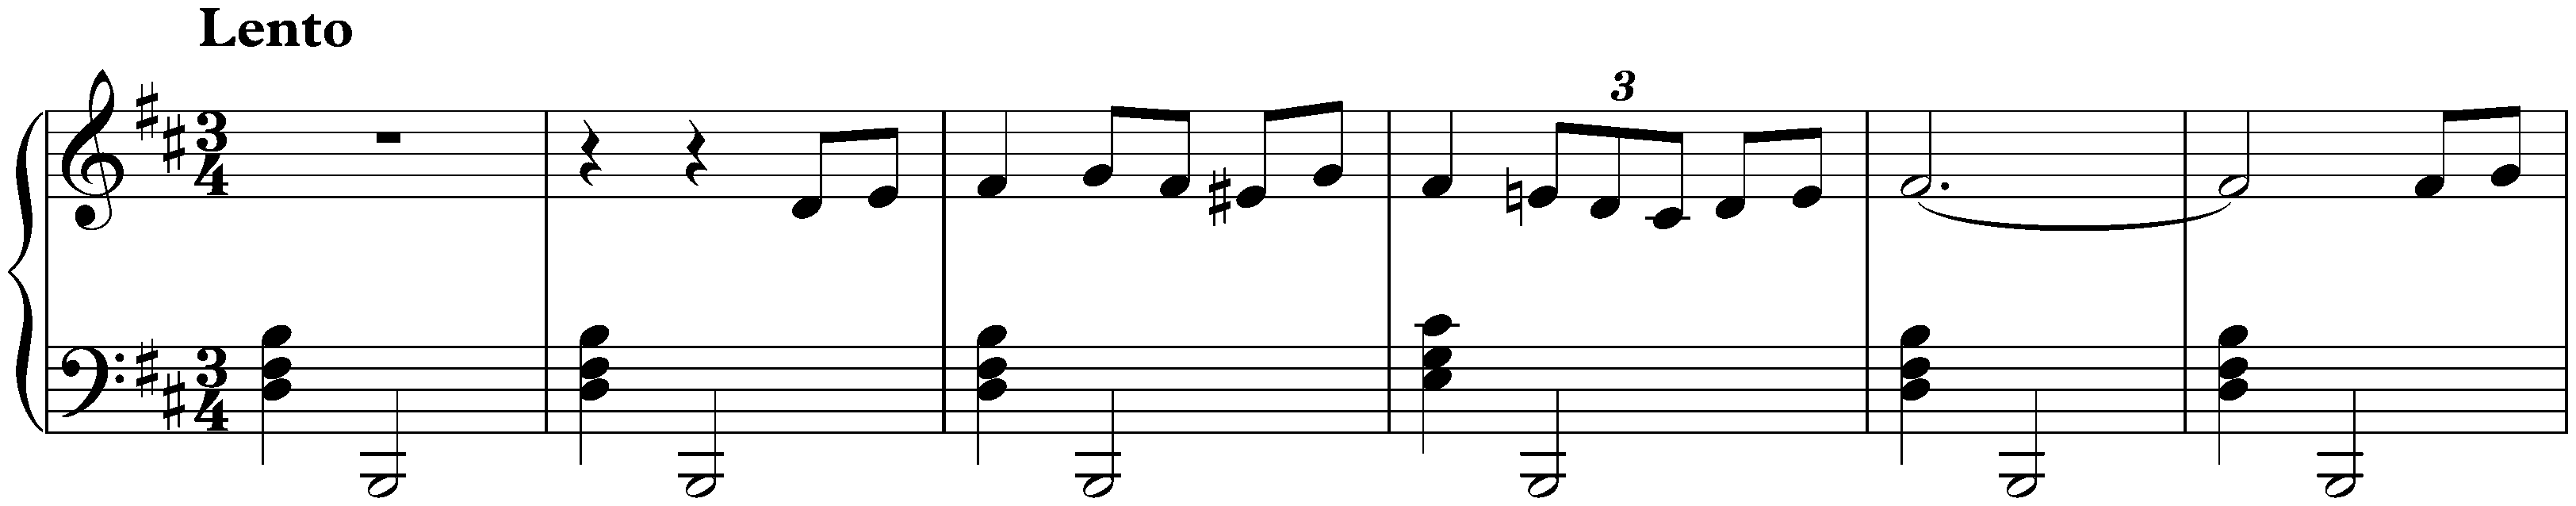 Suite in D minor; 2. Lento